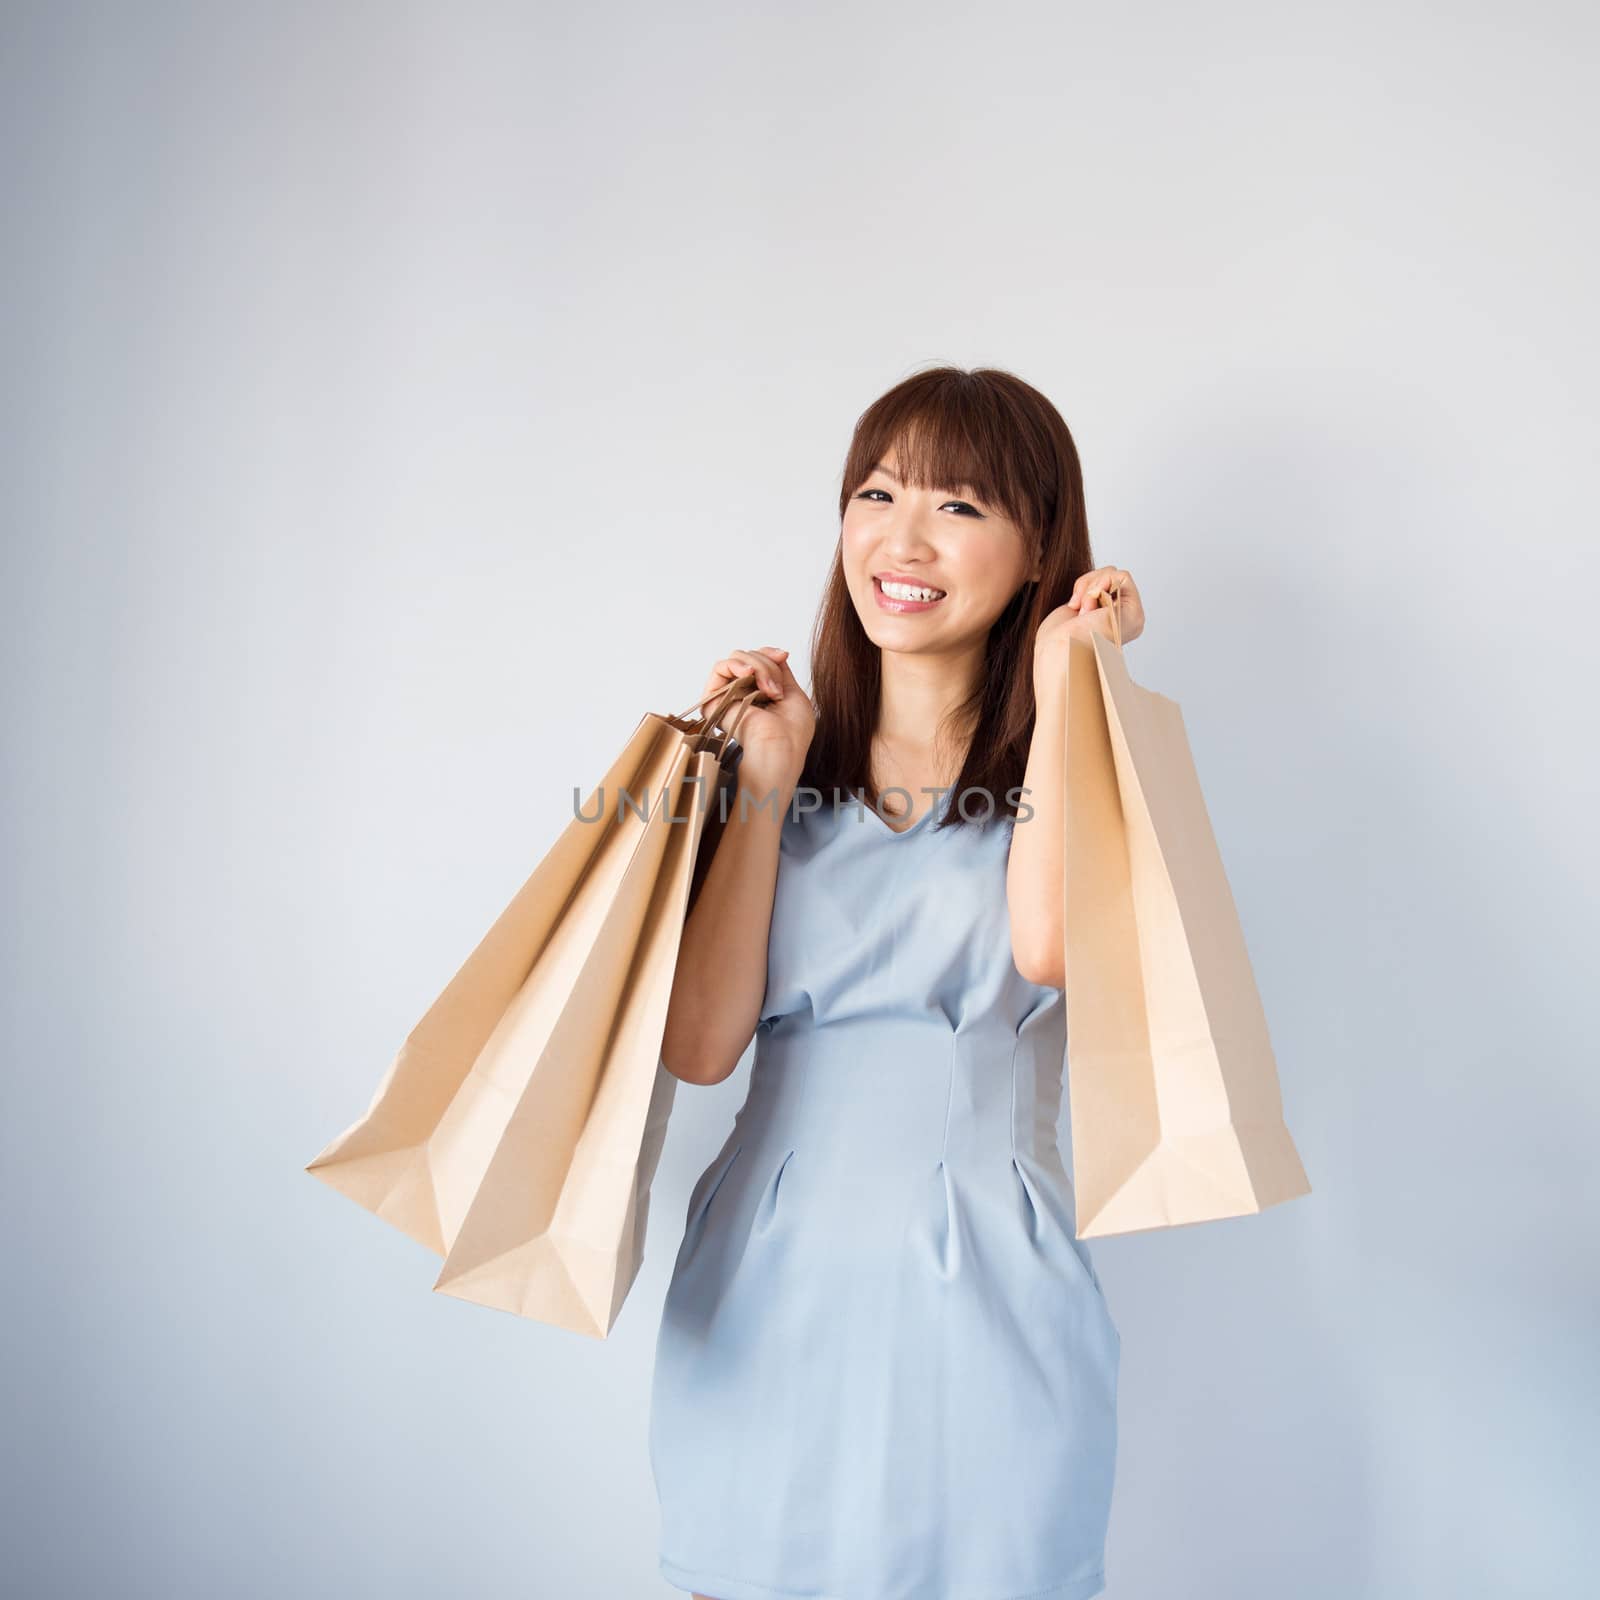 Happy Shopping woman by szefei